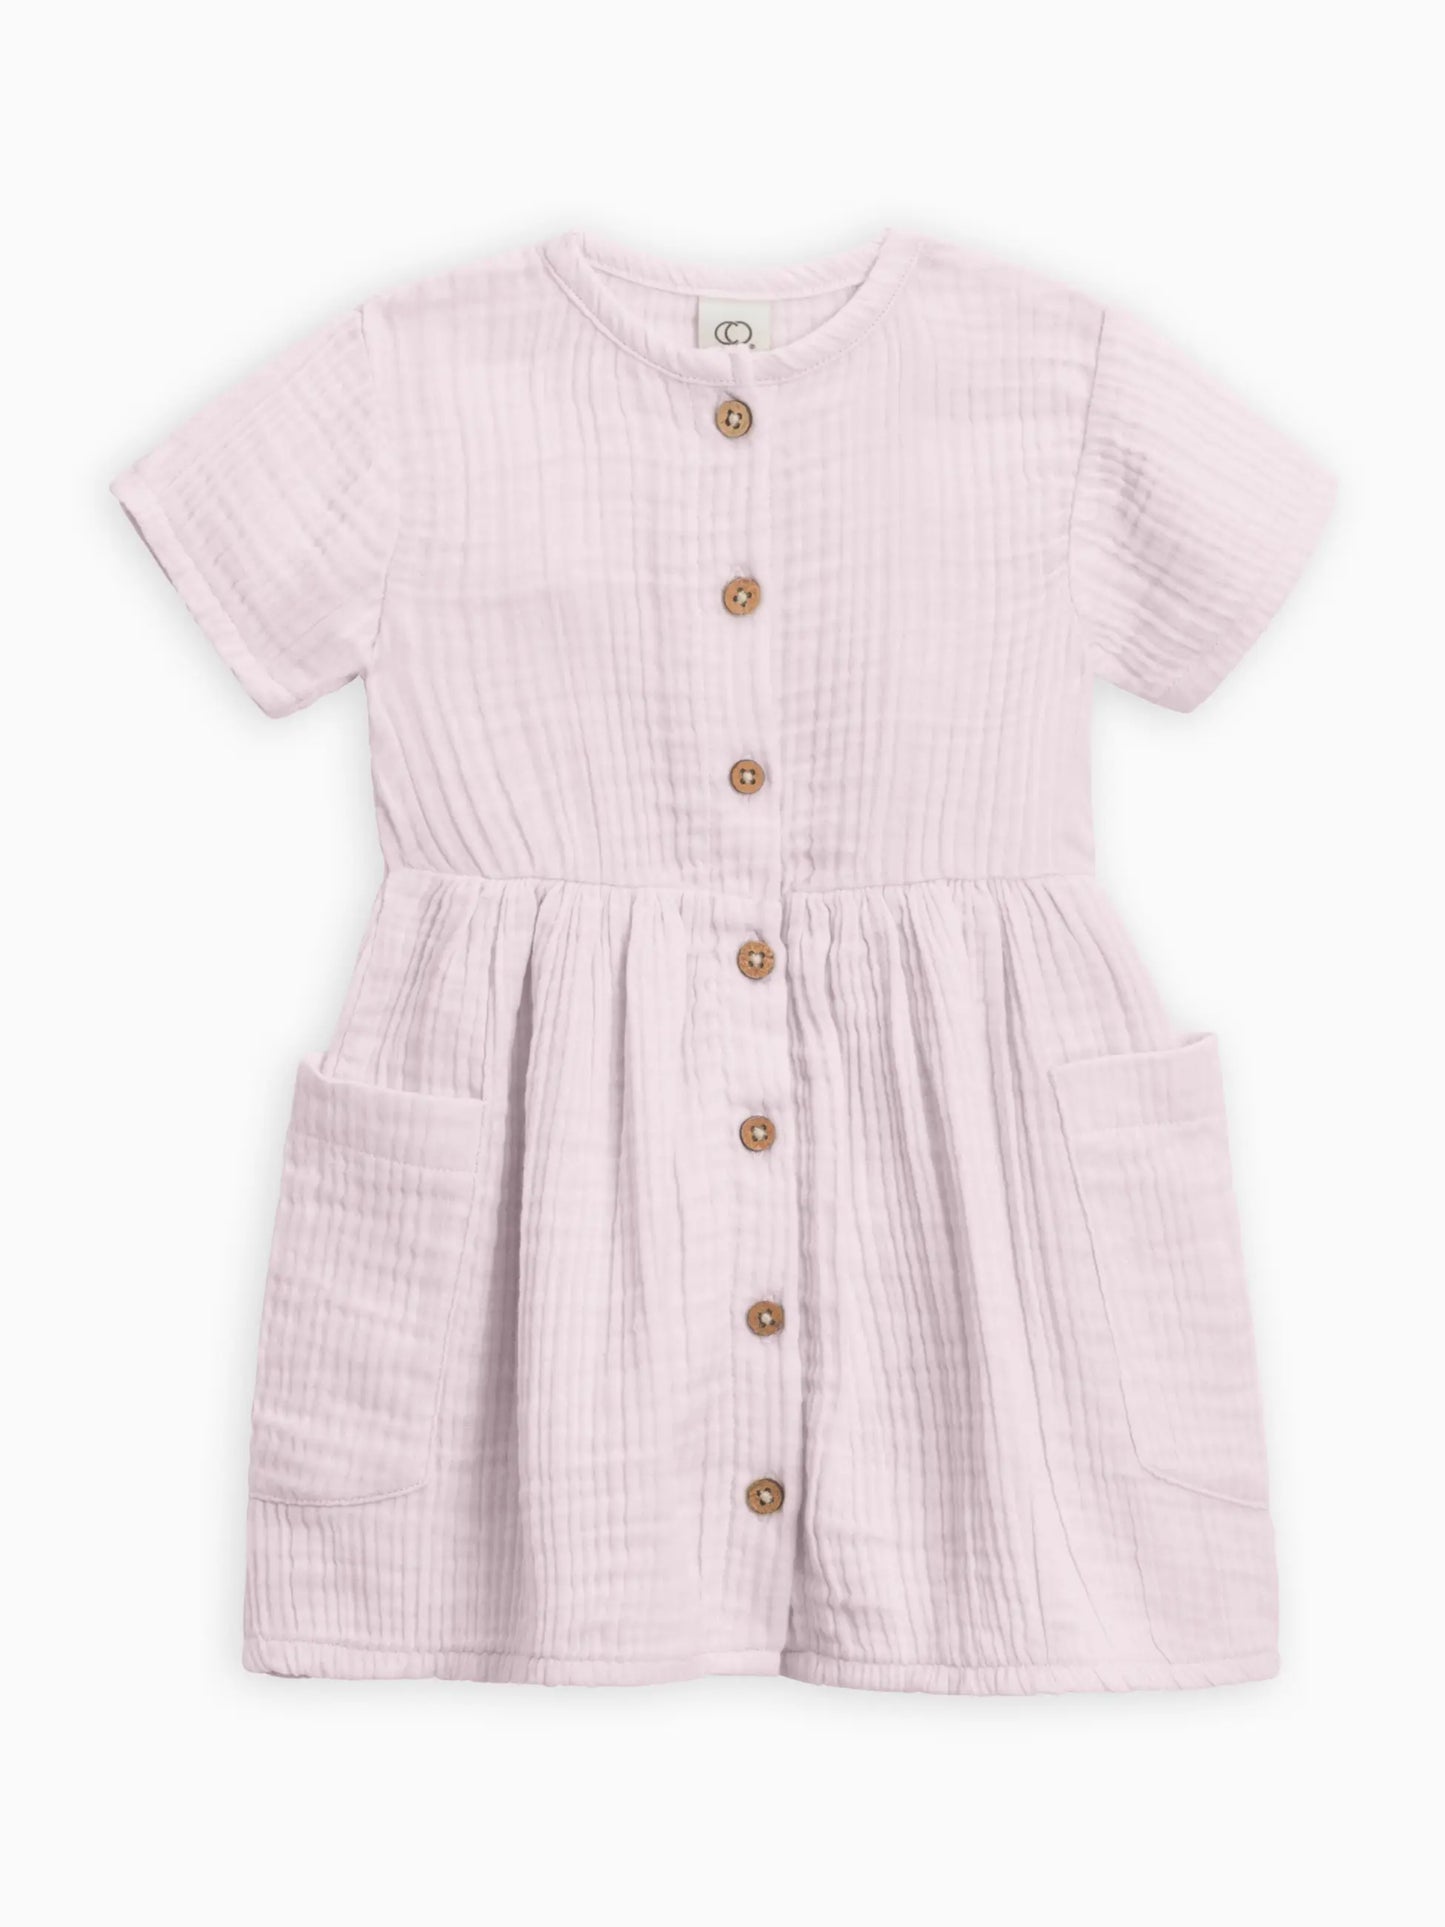 Colored Organics - Mabel Muslin Button Dress - Tan, Picnic, Lavender